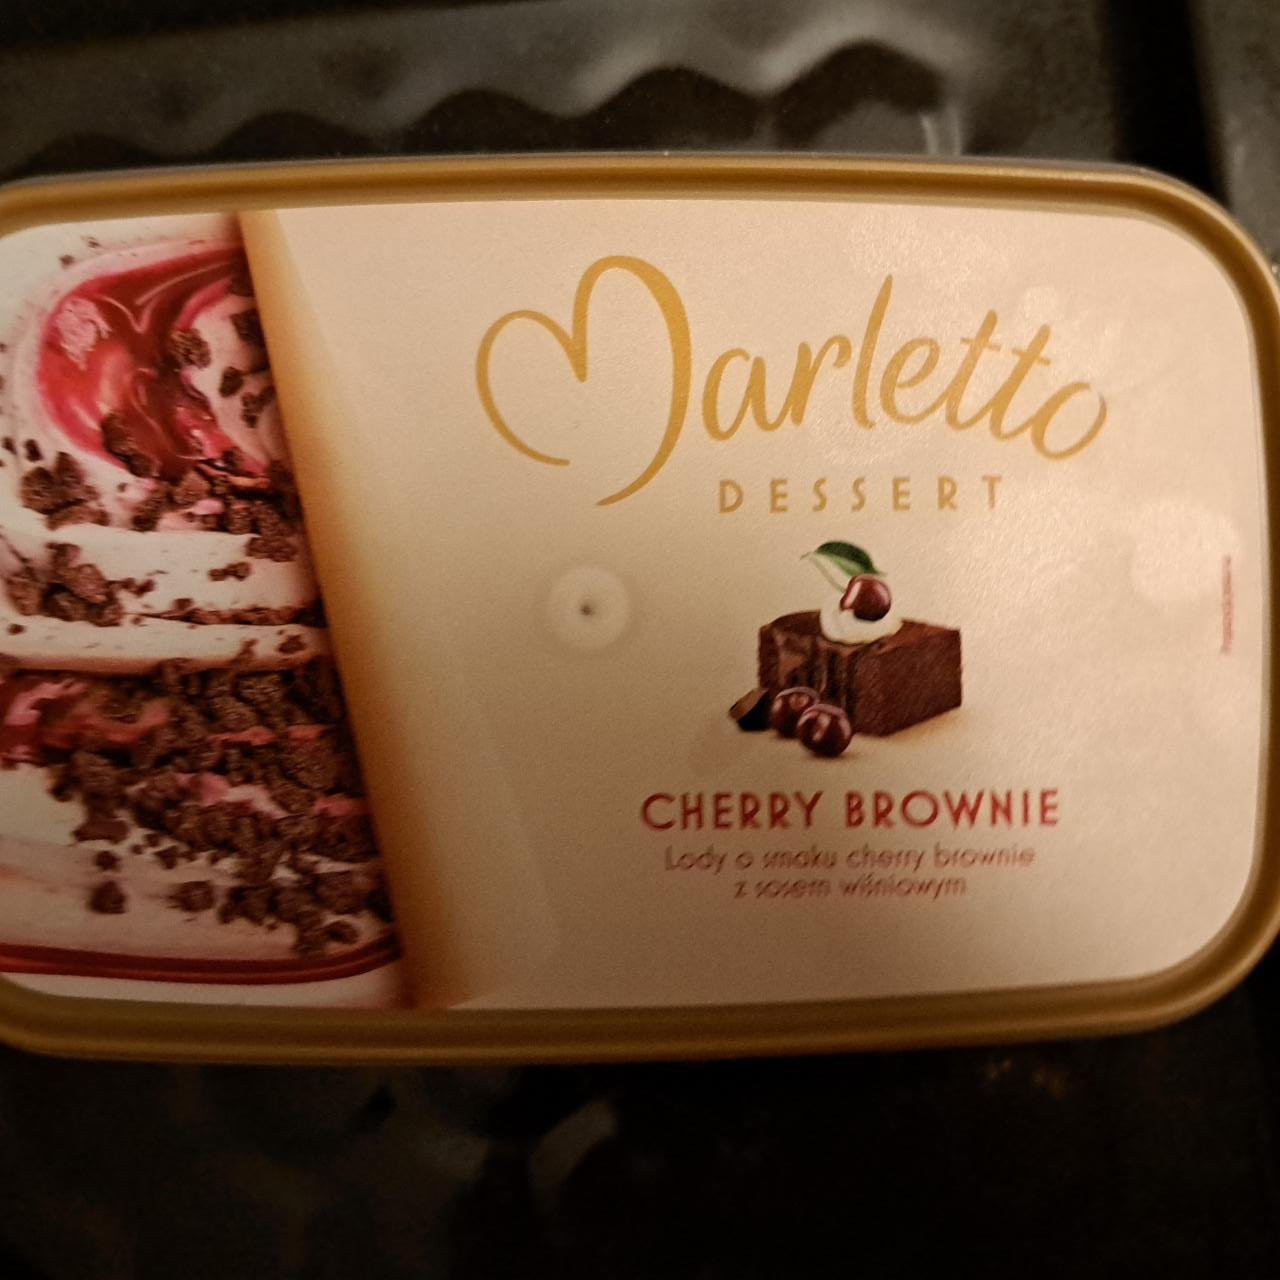 Фото - Dessert Cherry brownie Marletto